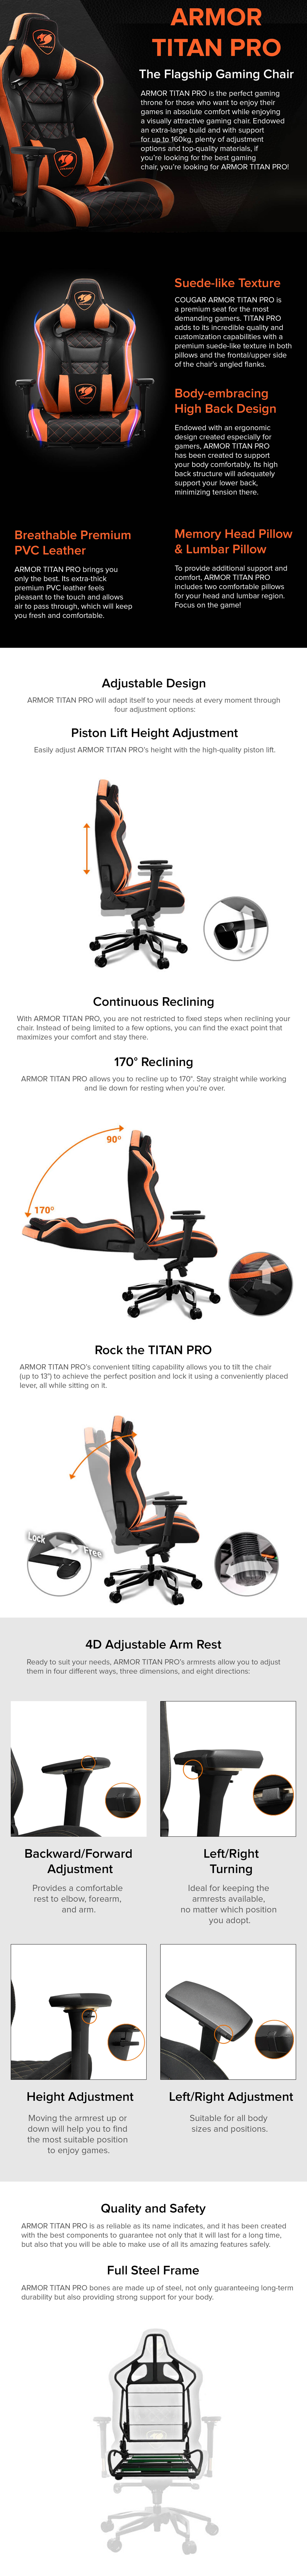 COUGAR Armor Titan Pro Gaming Chair (Royal) ARMOR TITAN ROYAL